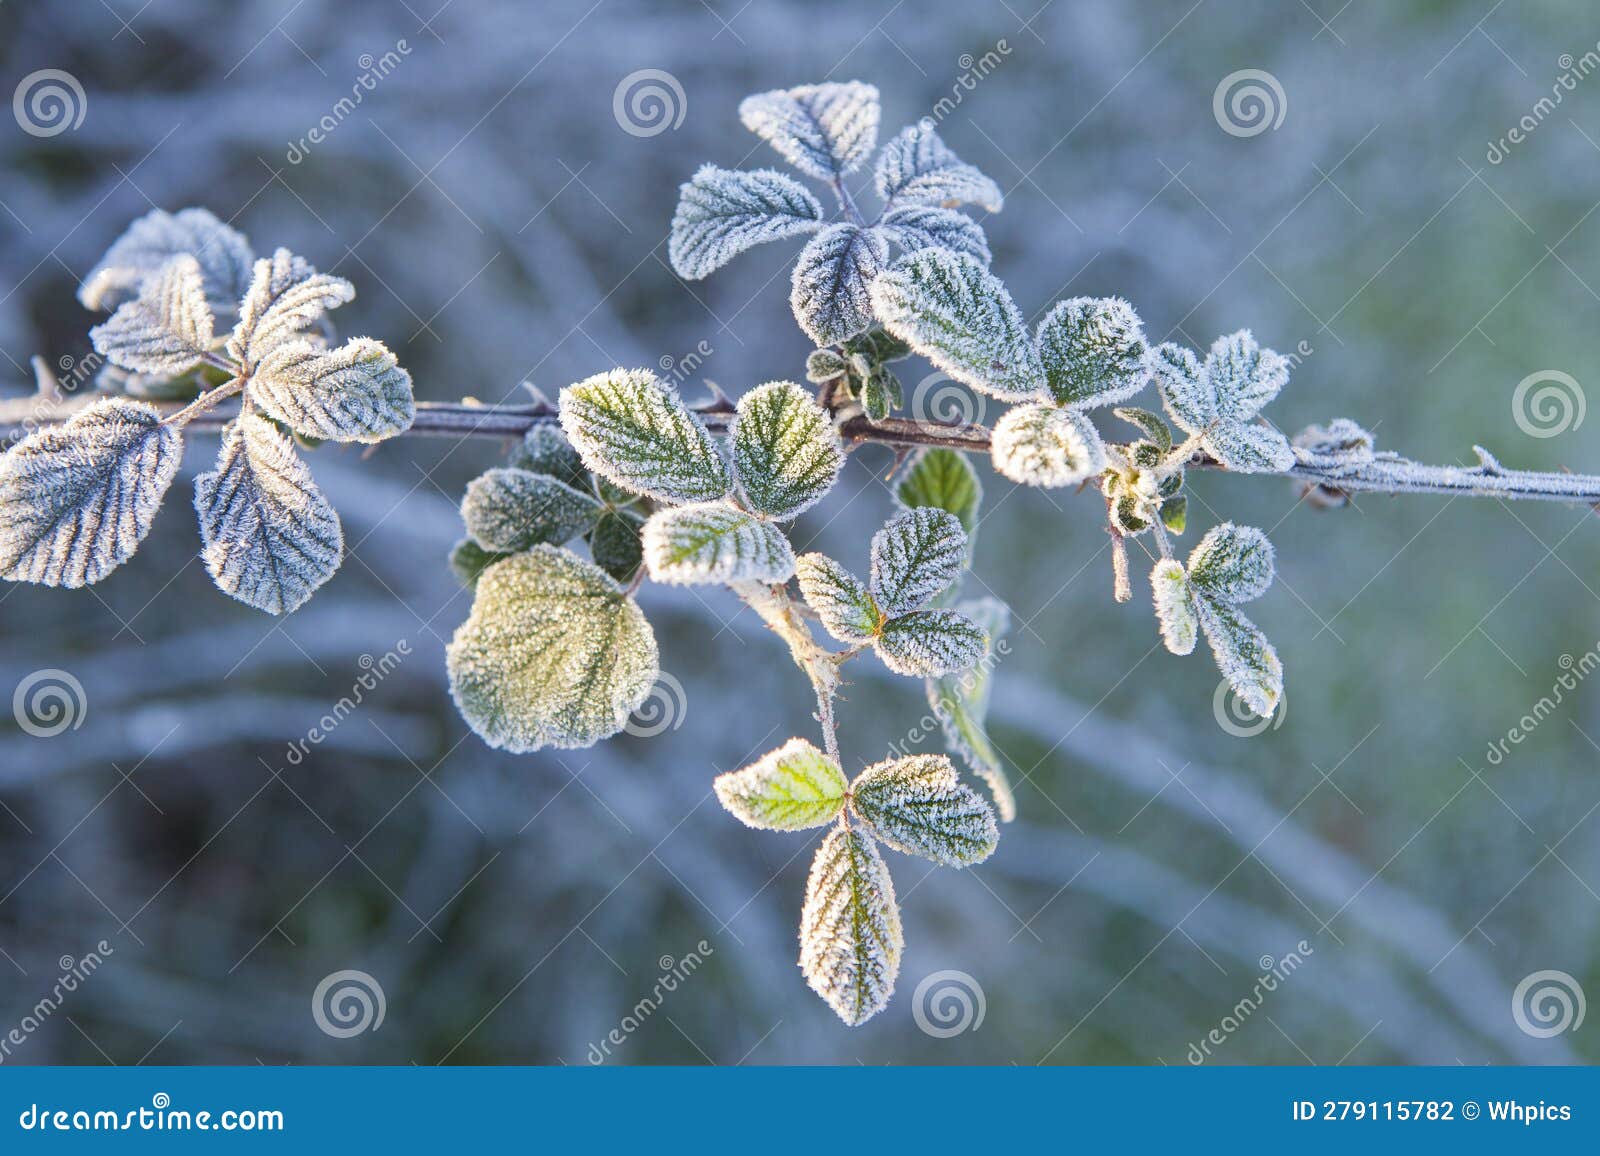 frost plant of wild blackberry or rubus ulmifolius